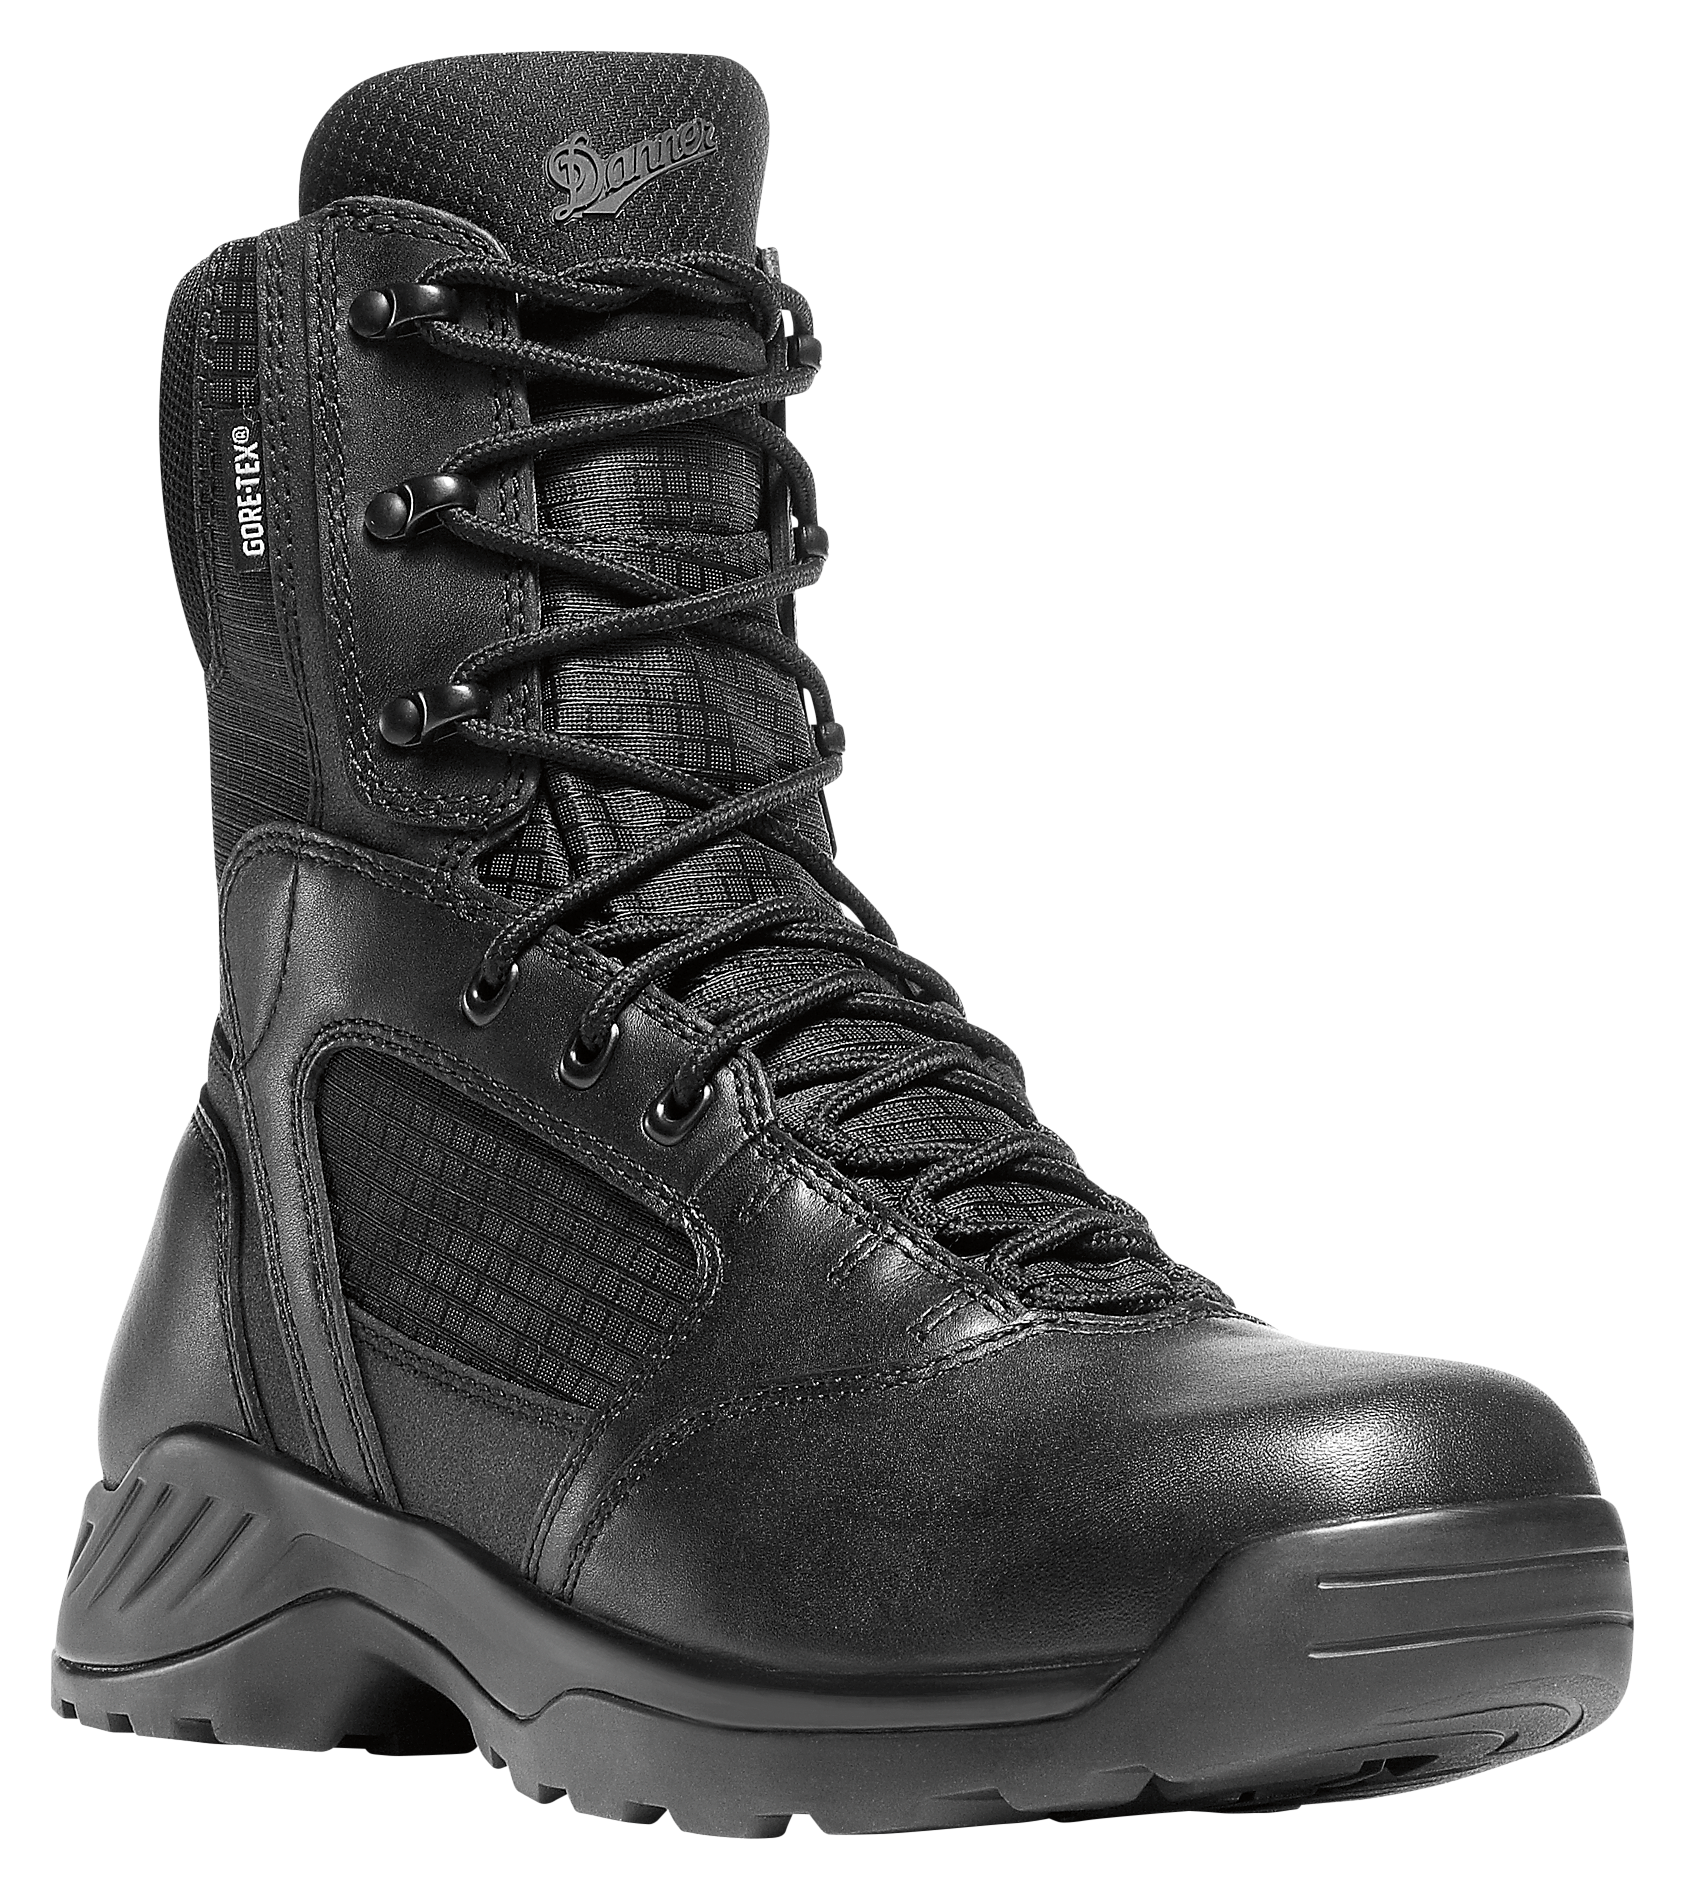 Danner Kinetic GTX Side-Zip Waterproof Tactical Duty Boots for Men - Black - 15M